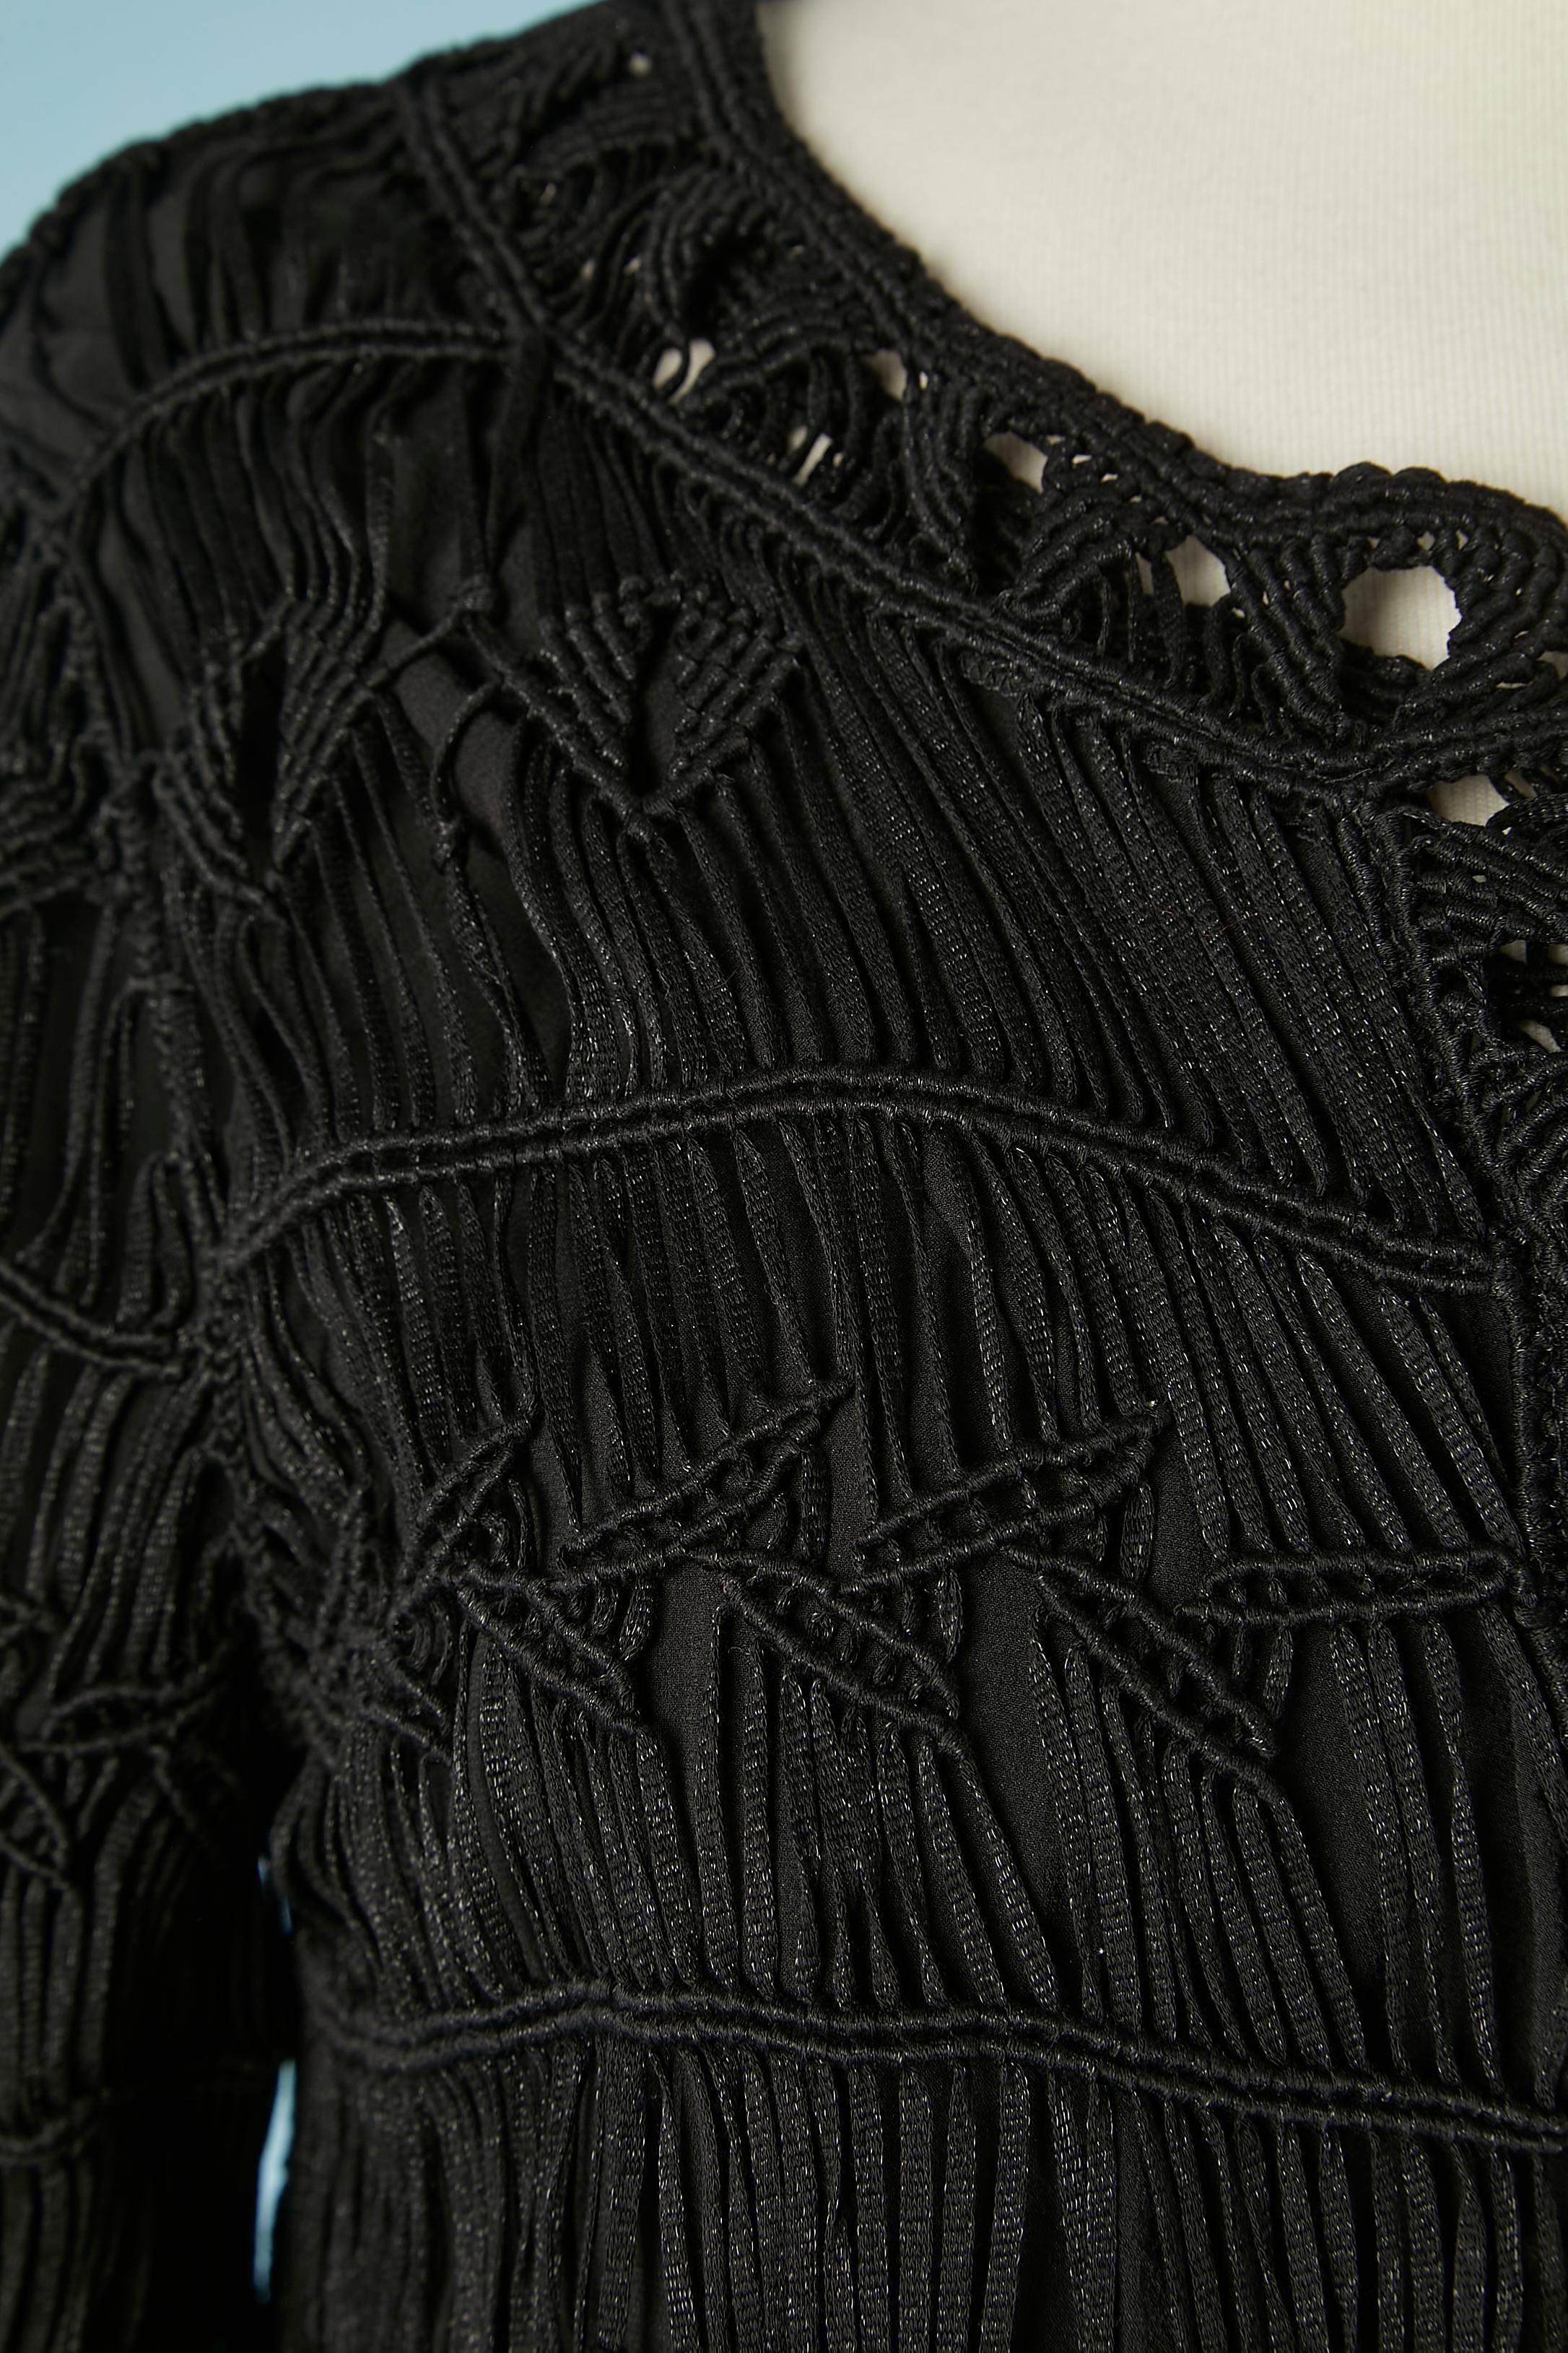 Coat and dress ensemble in black passementerie. Shell composition: 83% cotton, 17% nylon. Lining: 93% silk, 7% spandex.
Authenticity hologram
SIZE L